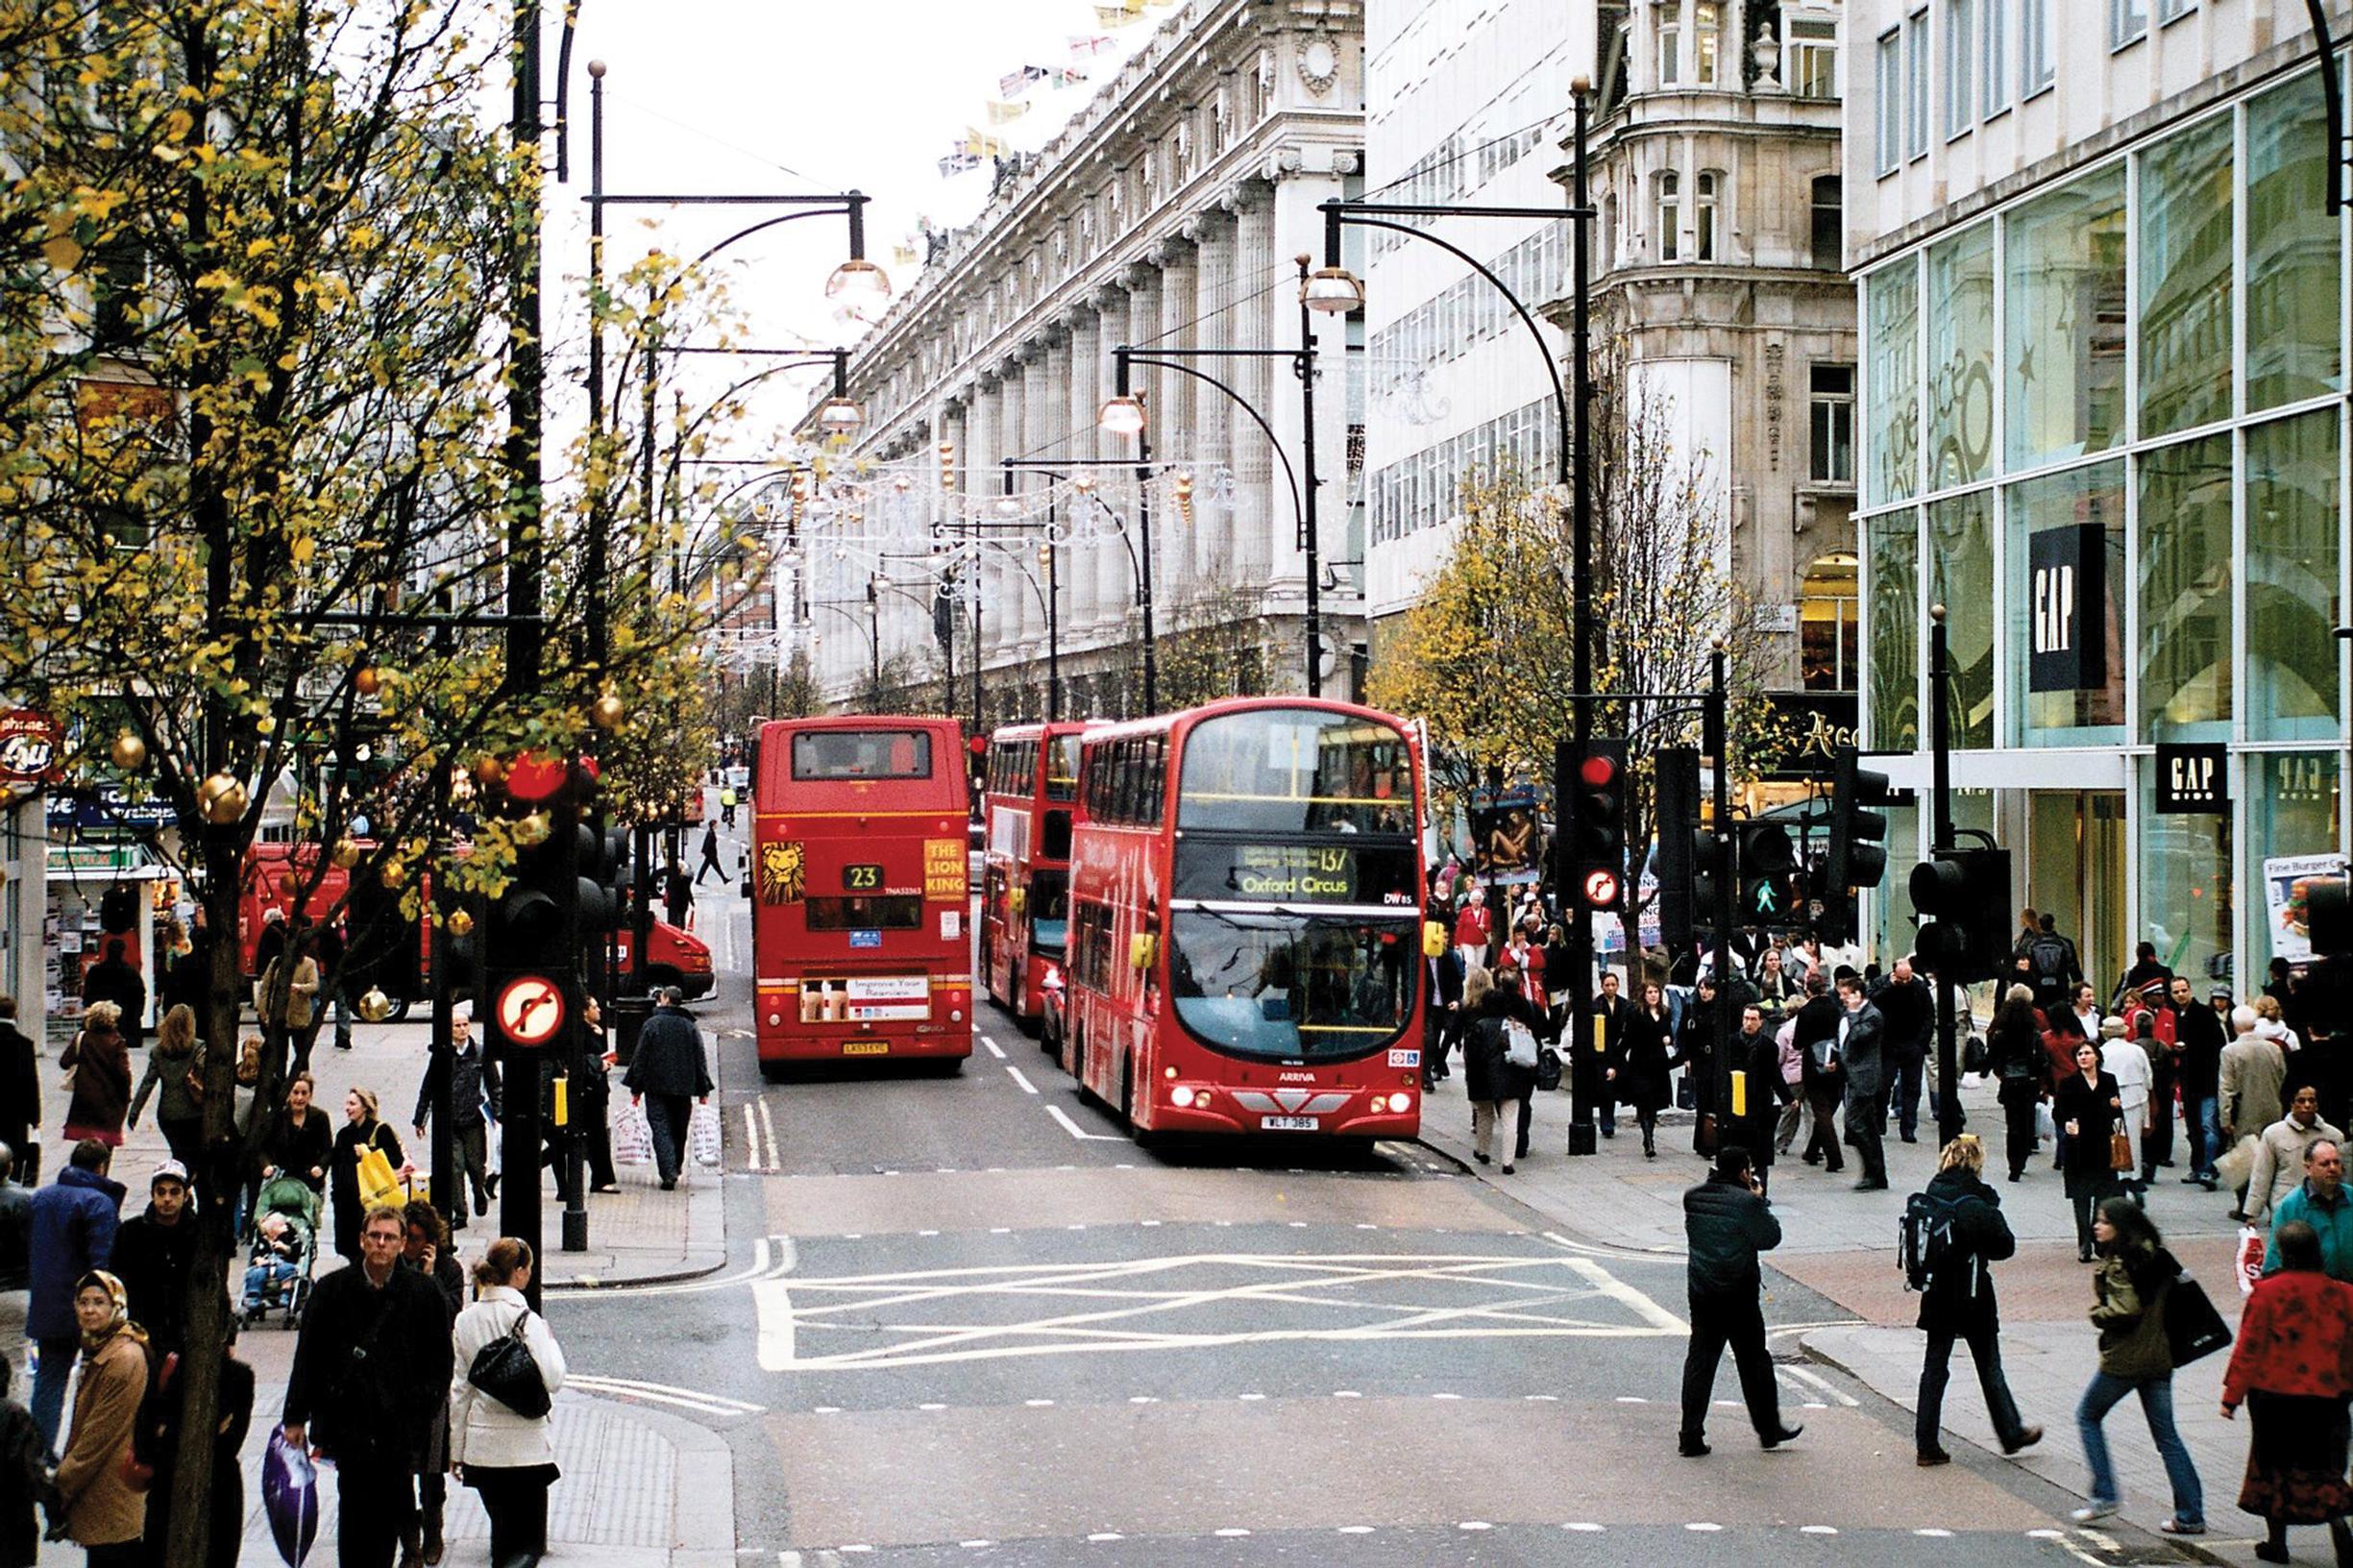 Oxford Street: bus-free?